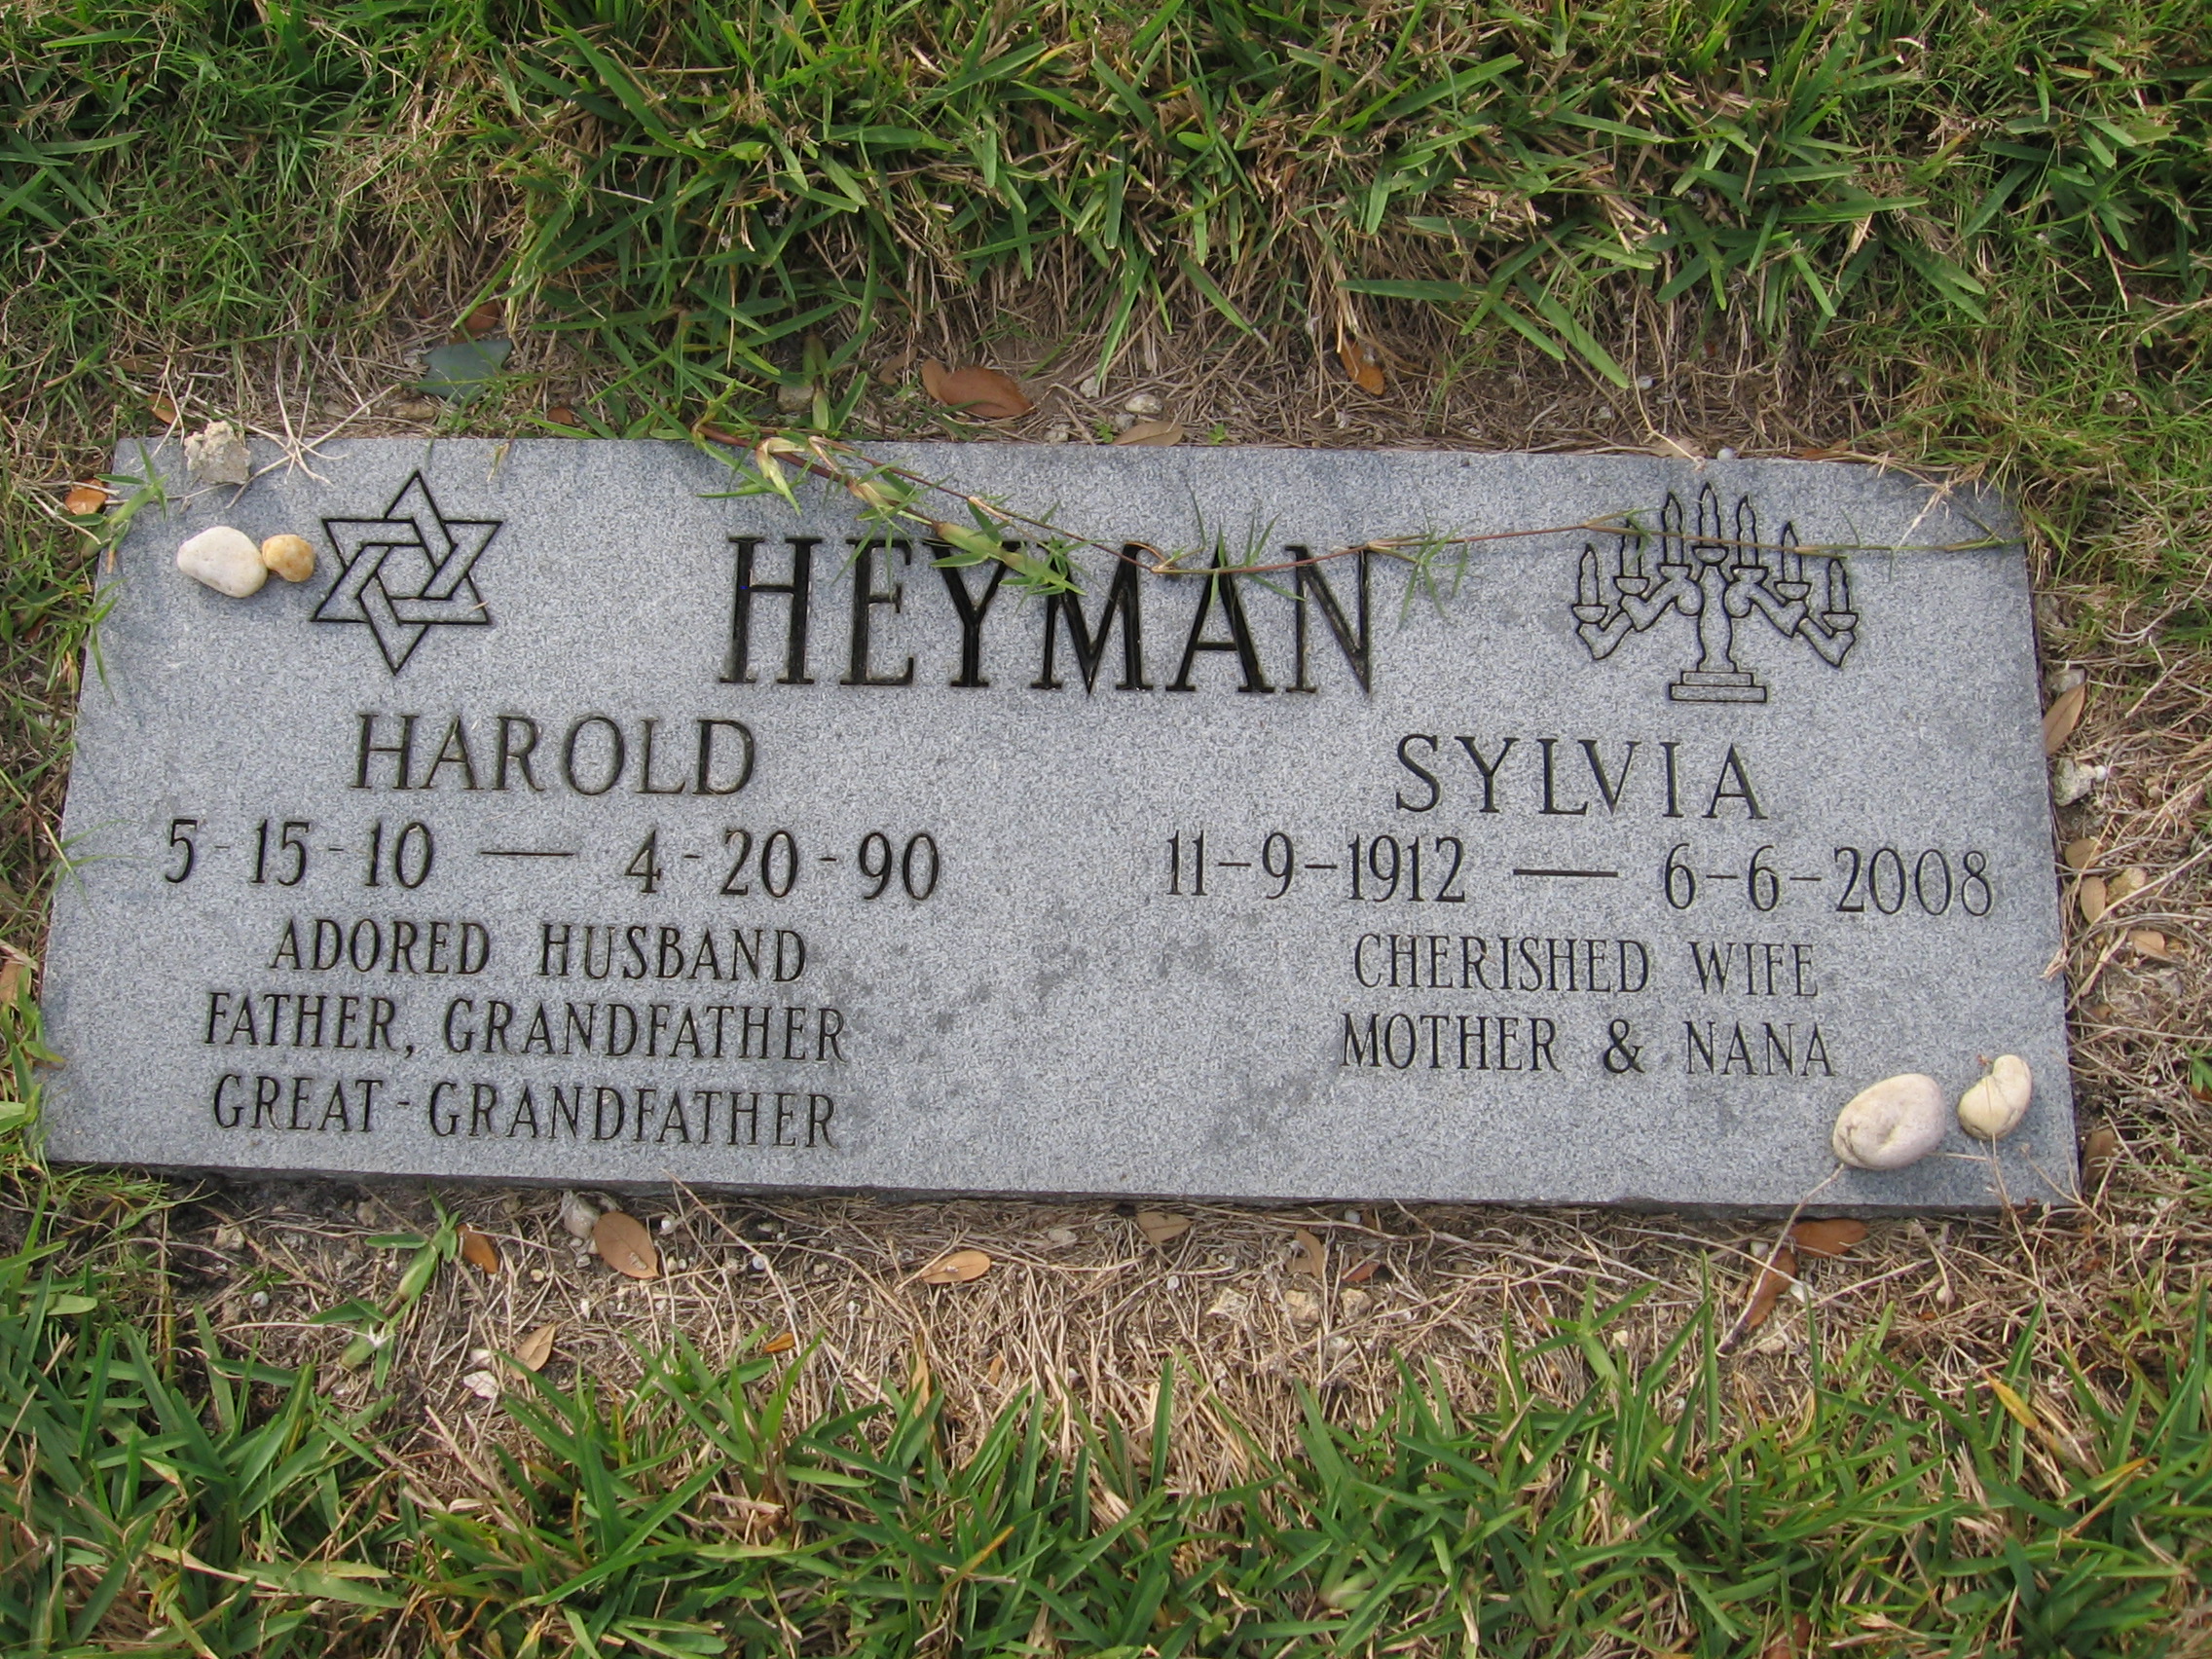 Harold Heyman